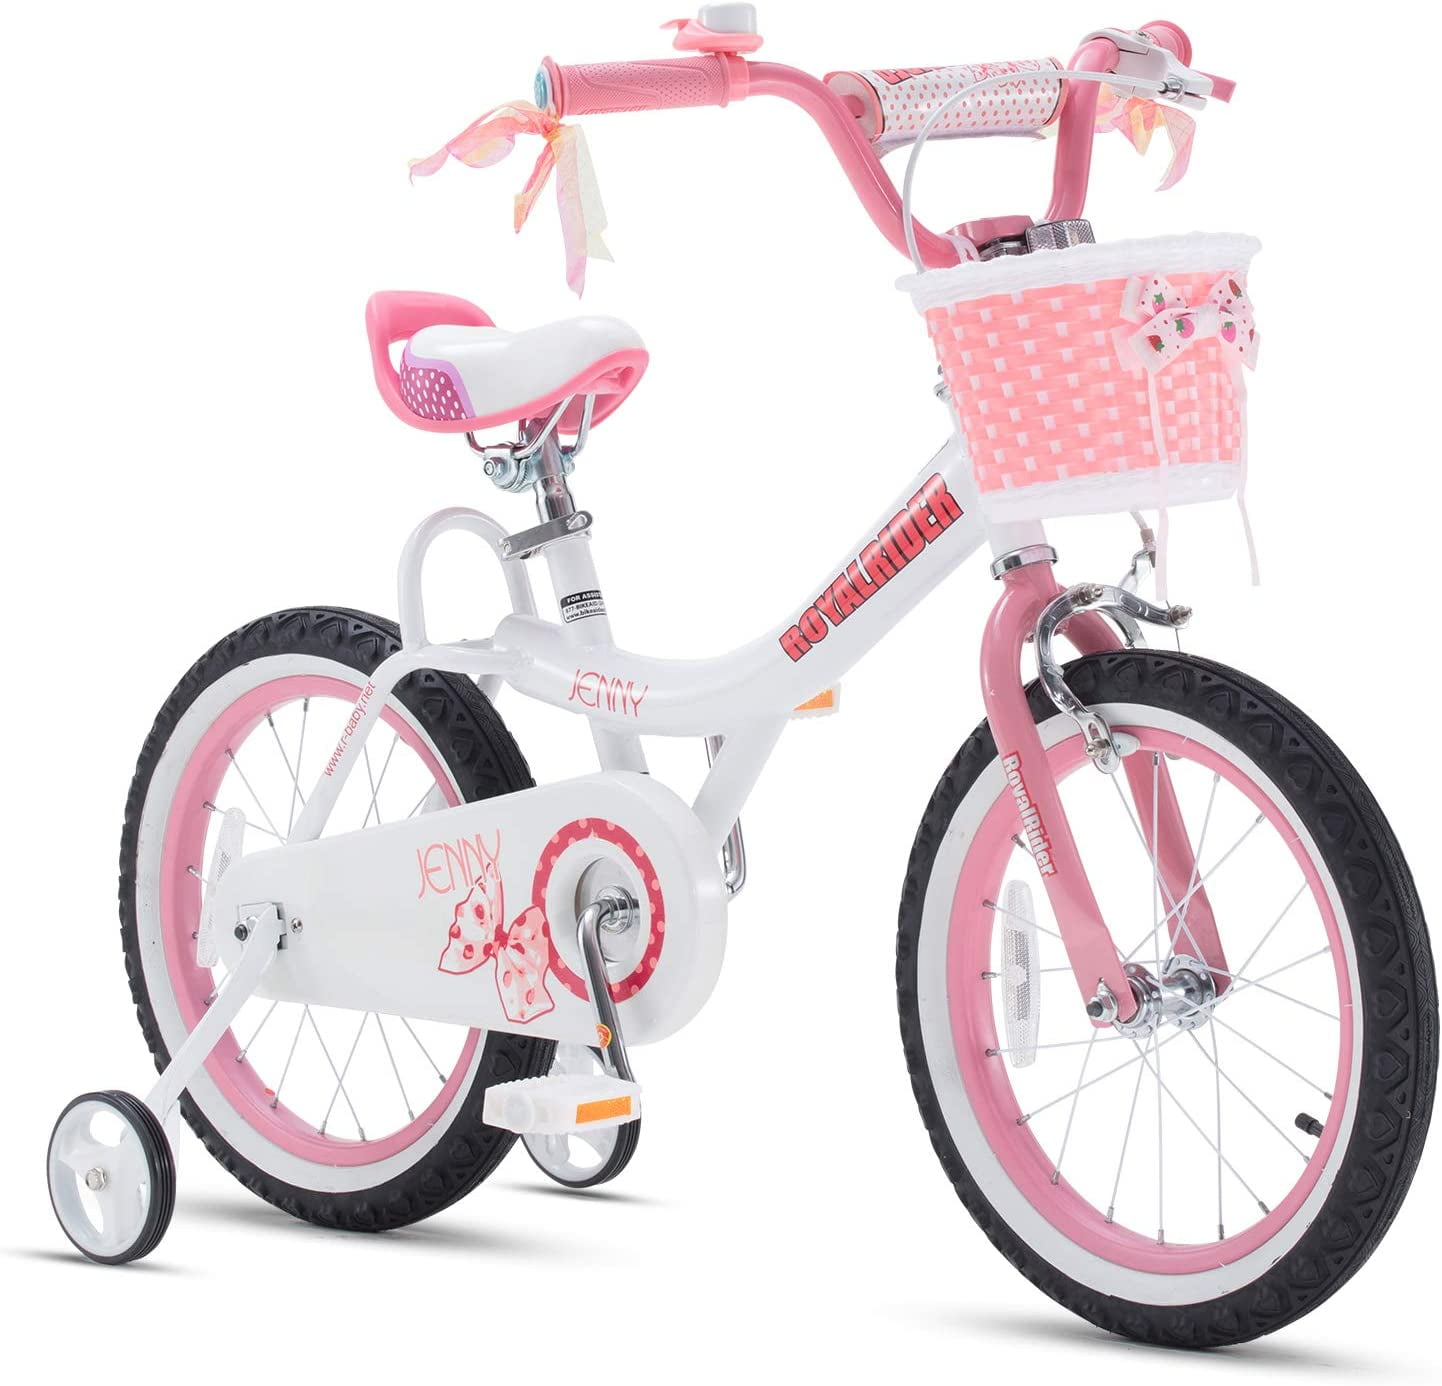 RoyalBaby Girls Kids Bike Stargirl 12 14 Inch Bicycle with Basket Training Wheel